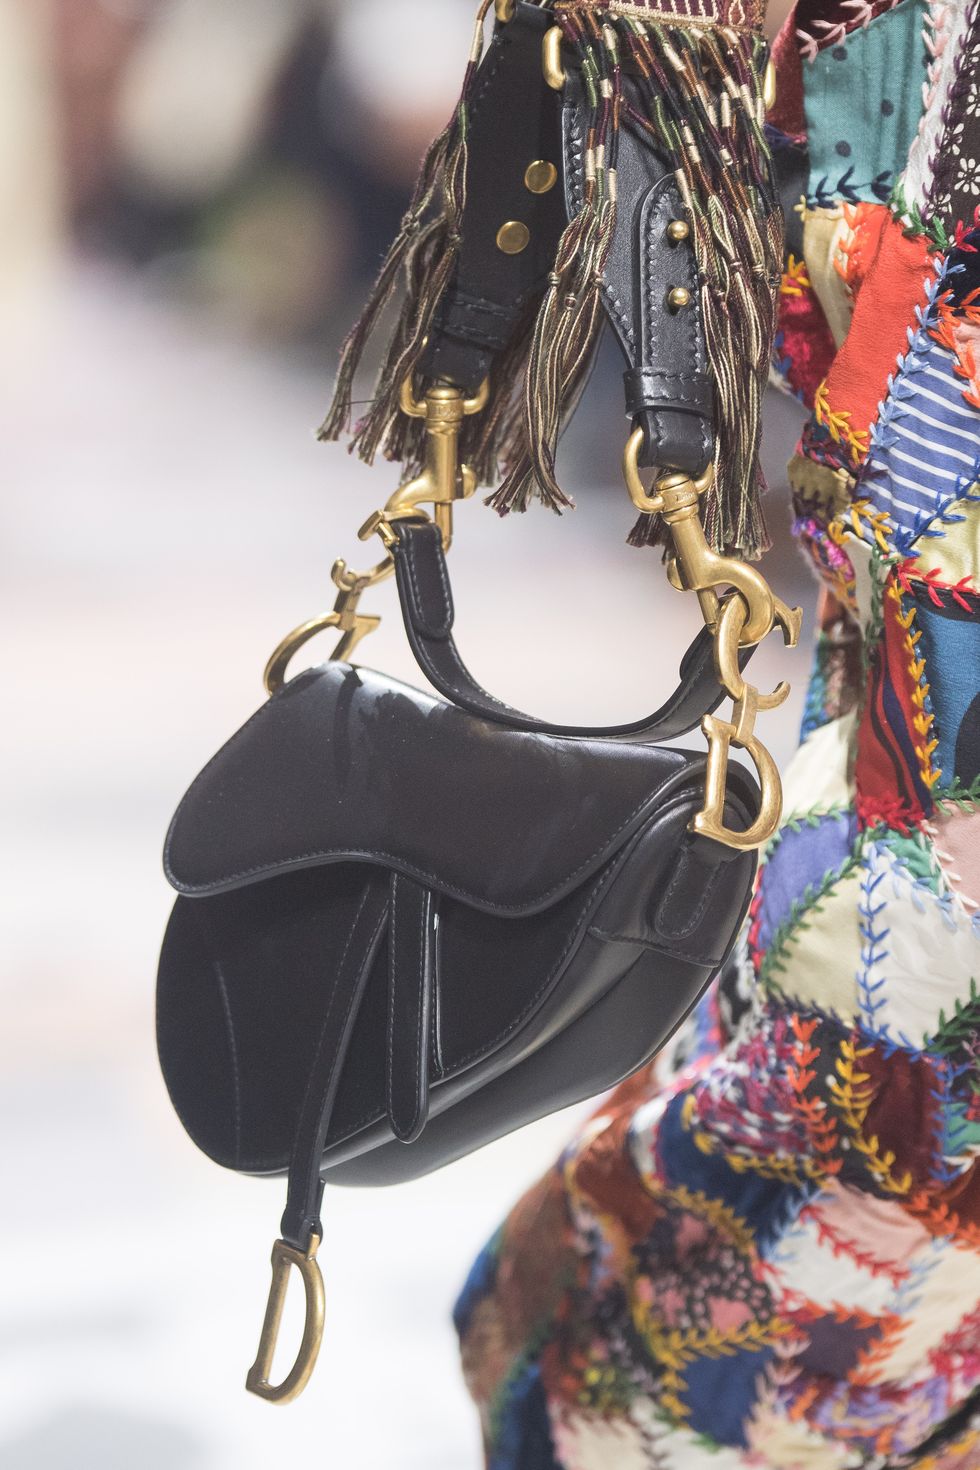 Dior saddle bag makes a big comeback